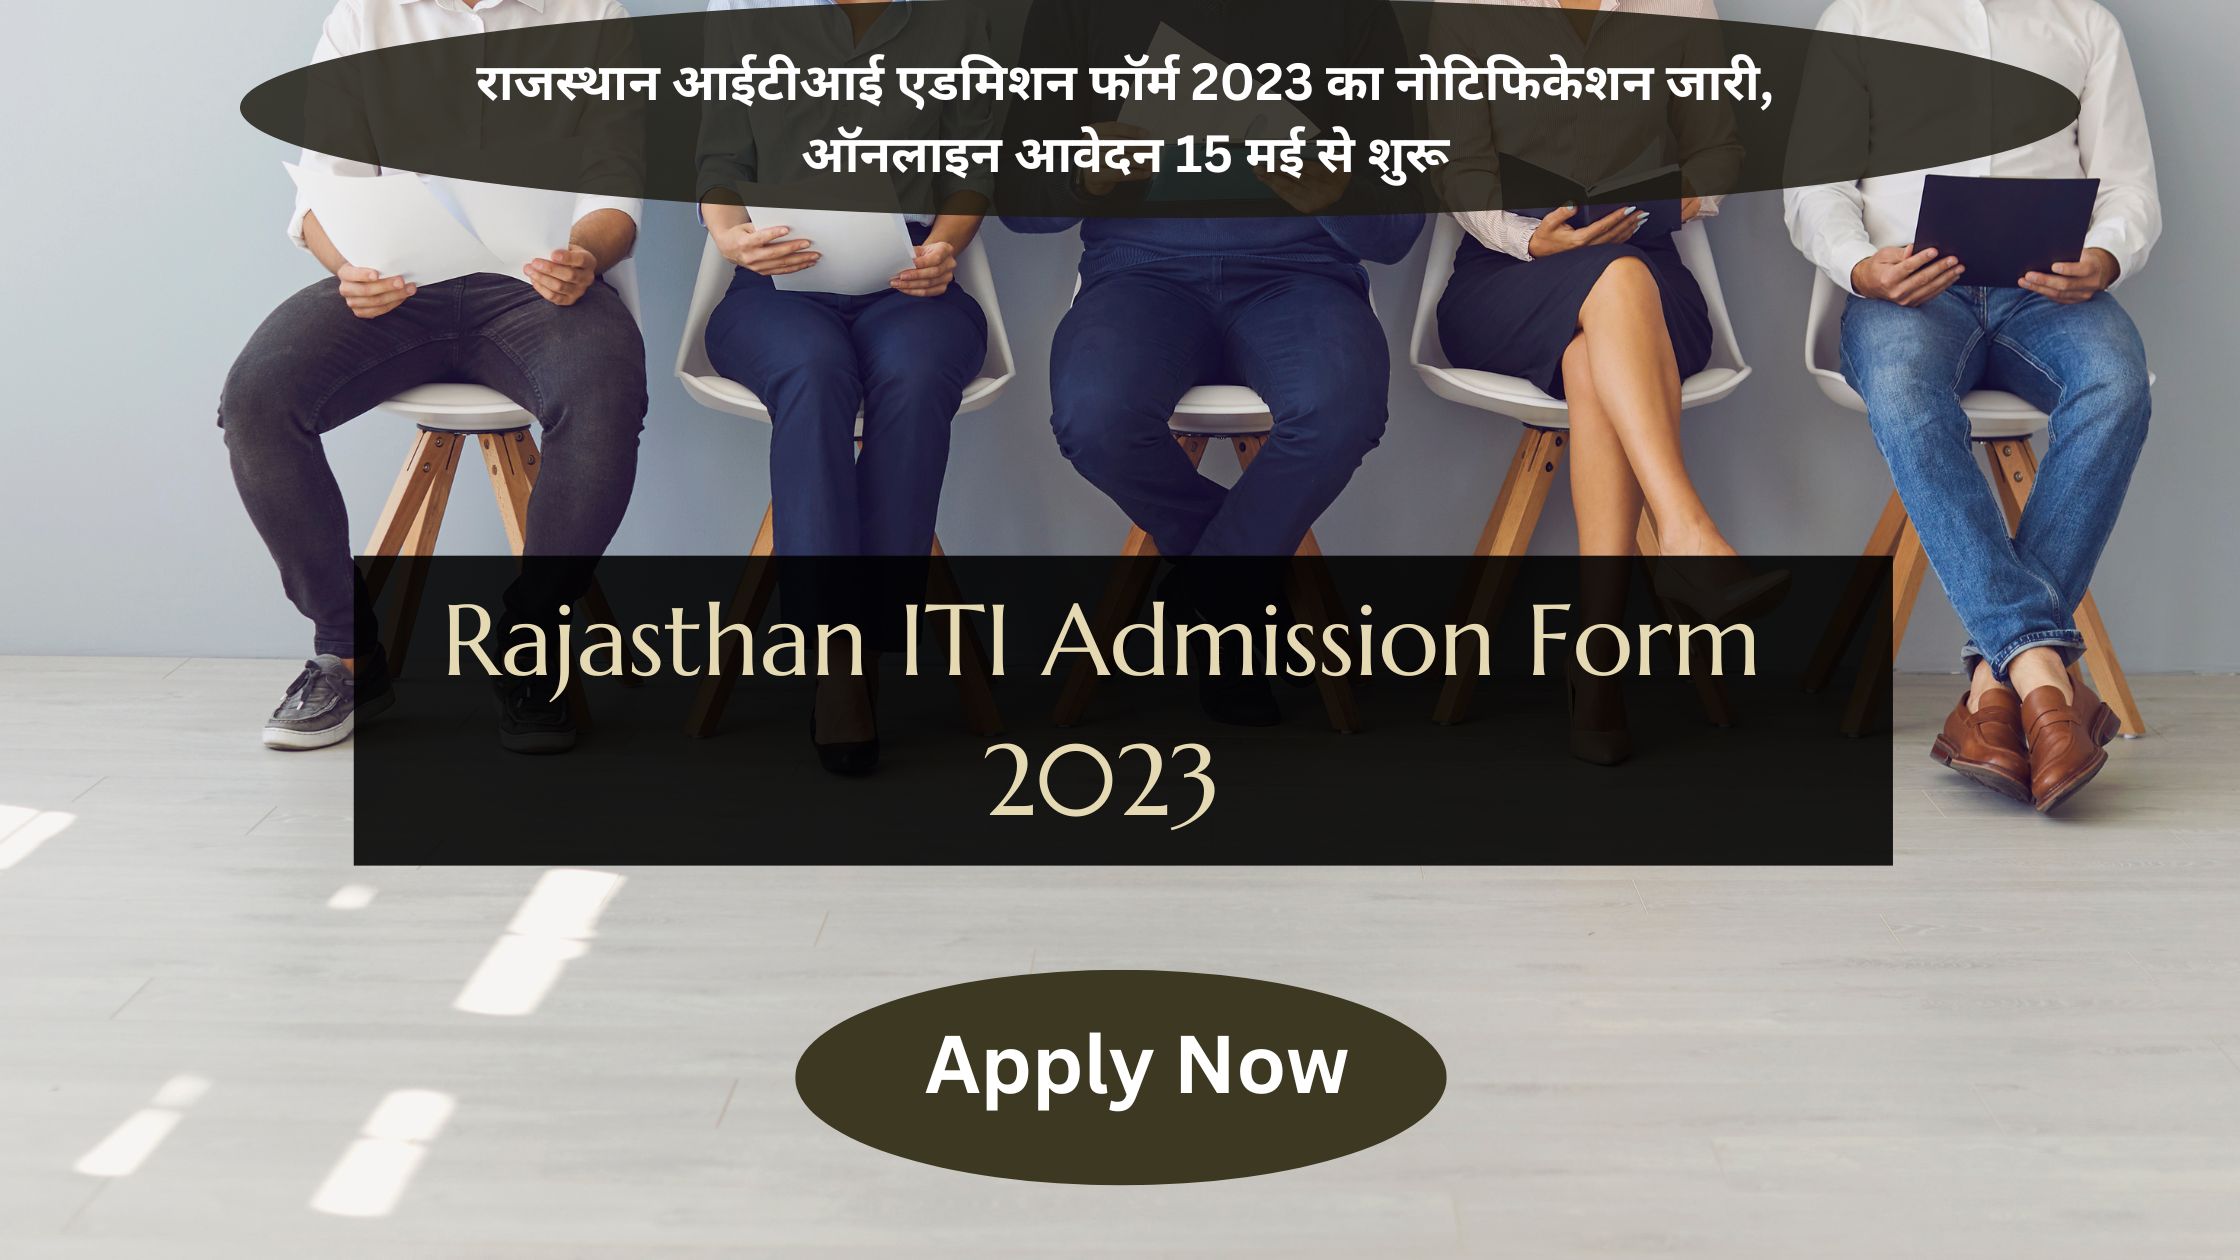 Rajasthan ITI Admission Form 2023